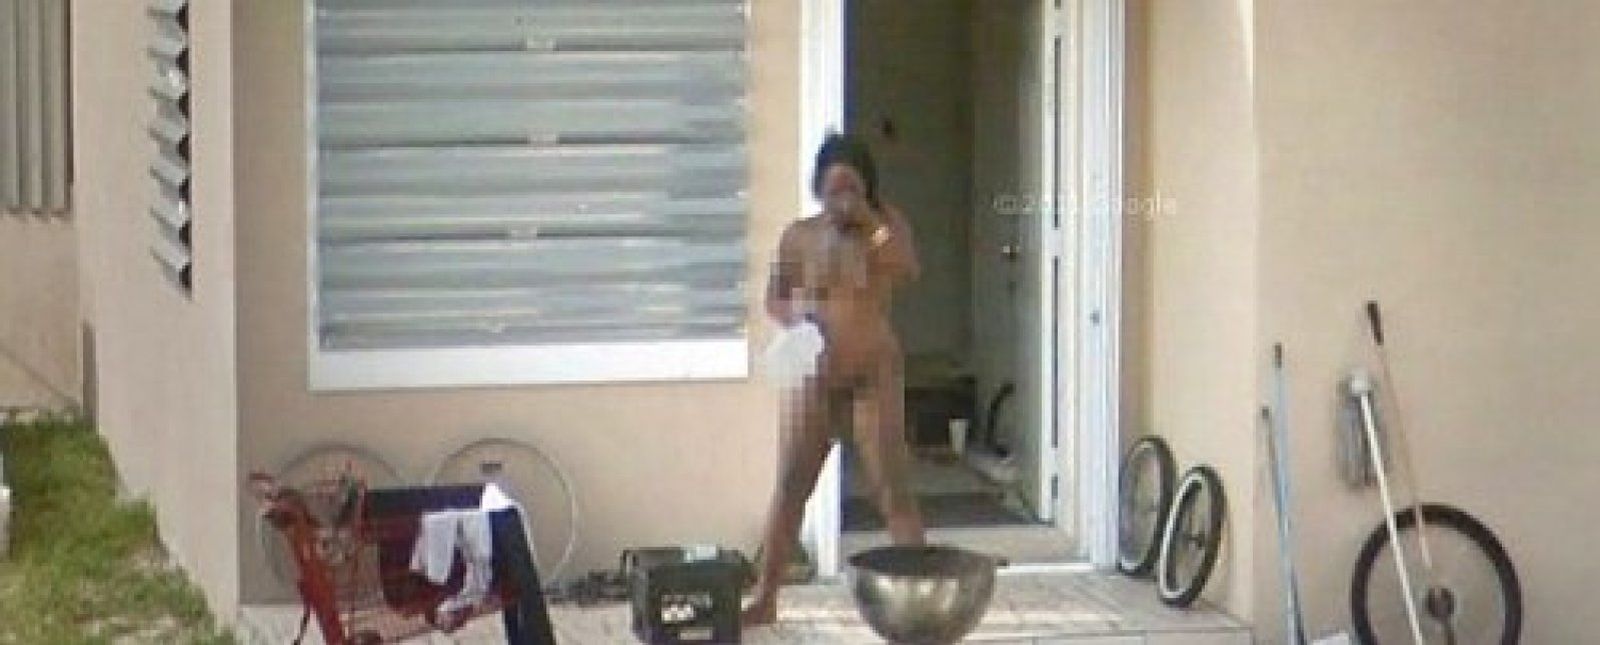 Foto: La mujer desnuda captada por Google Street View que se hizo viral